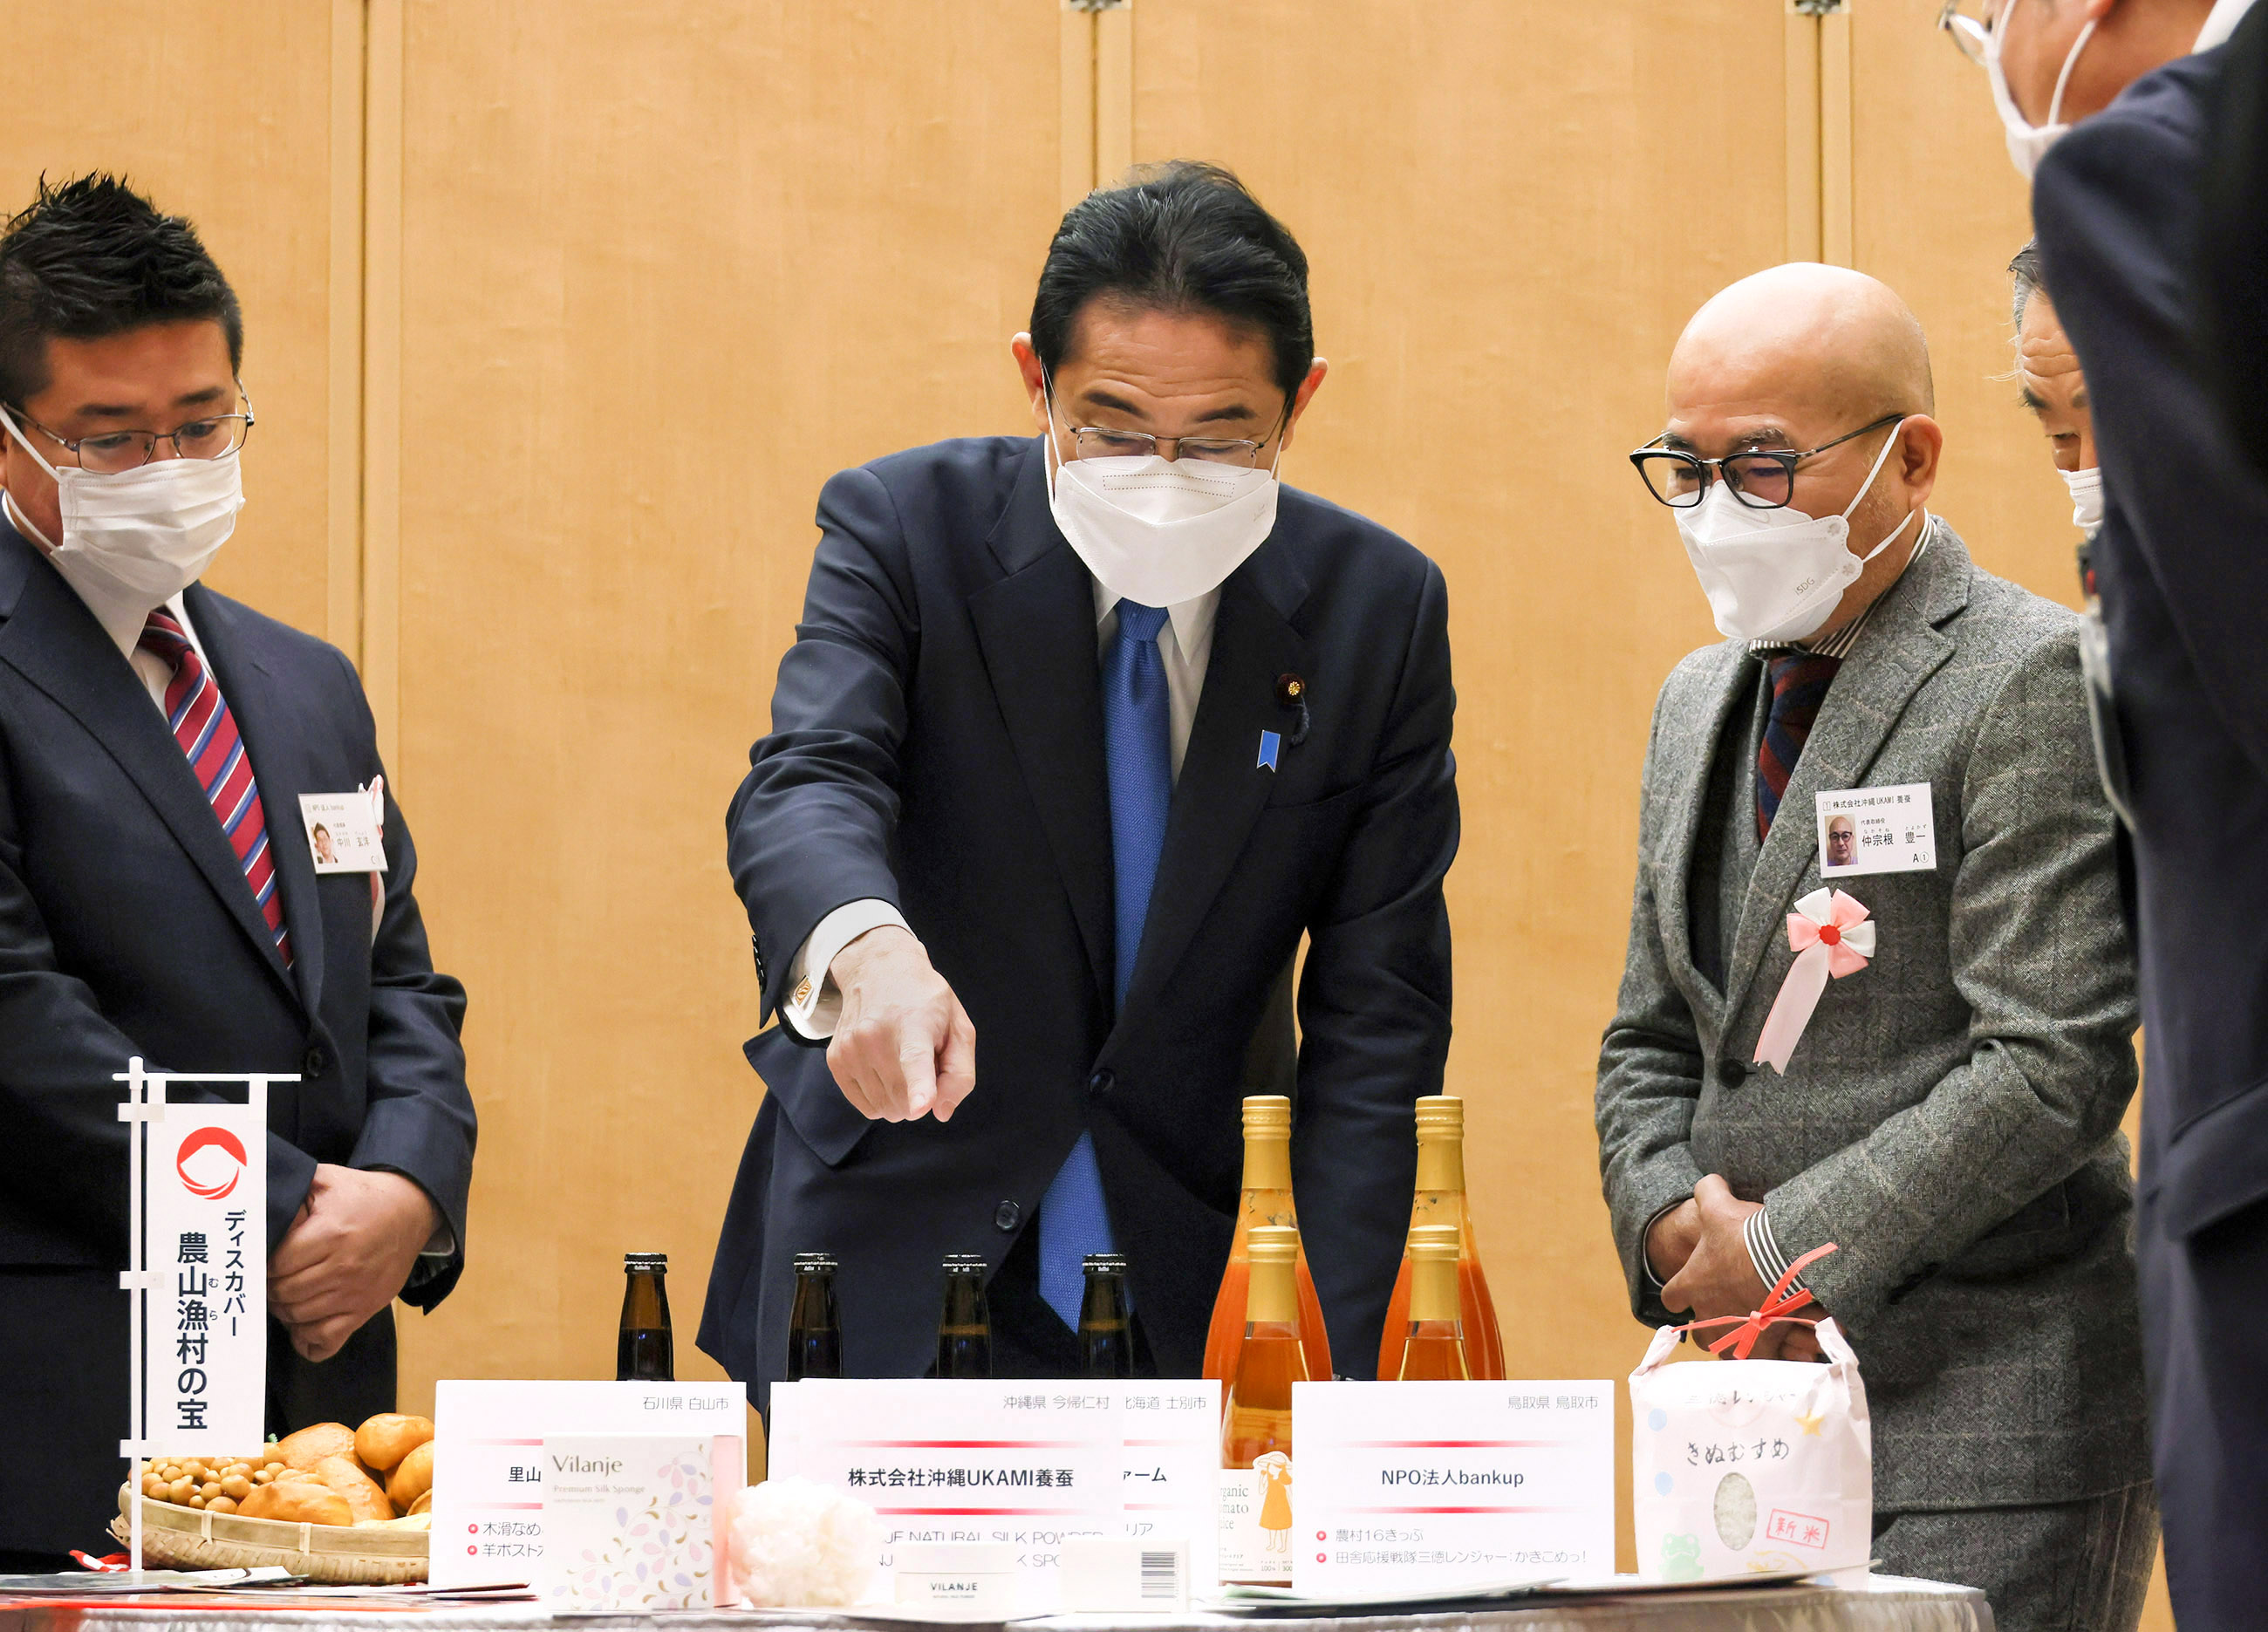 Prime Minister Kishida interacting with award winners (1)